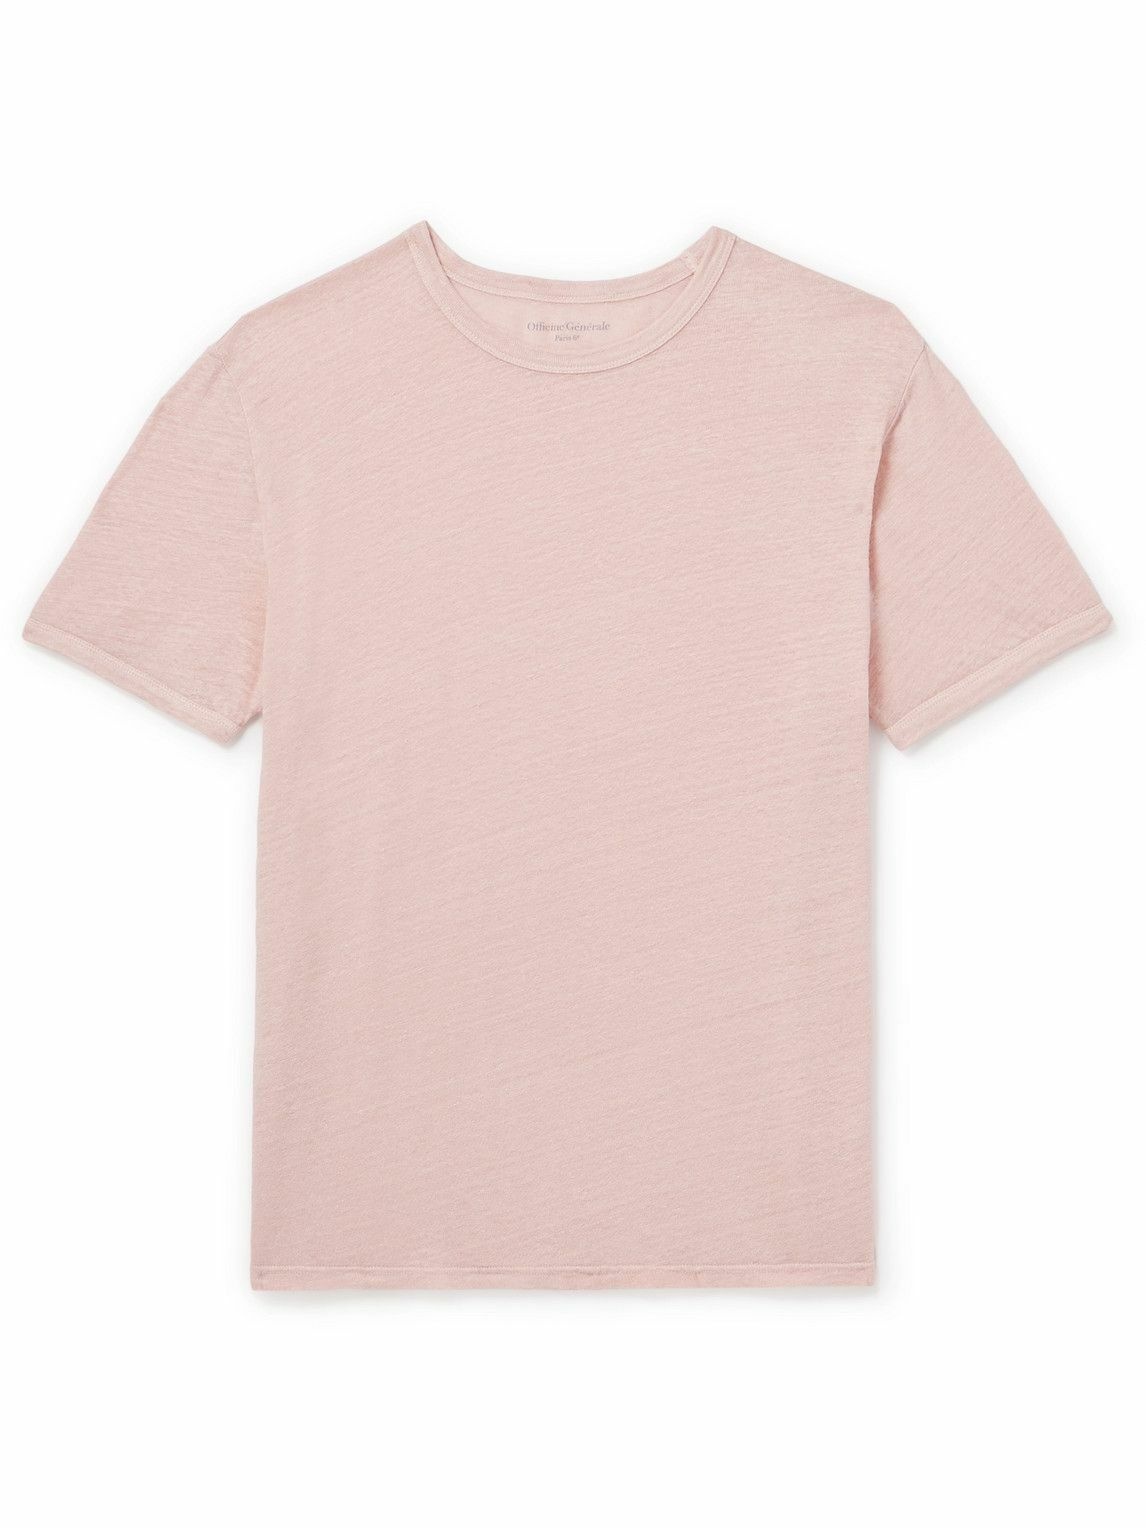 Photo: Officine Générale - Garment-Dyed Linen-Blend T-Shirt - Pink